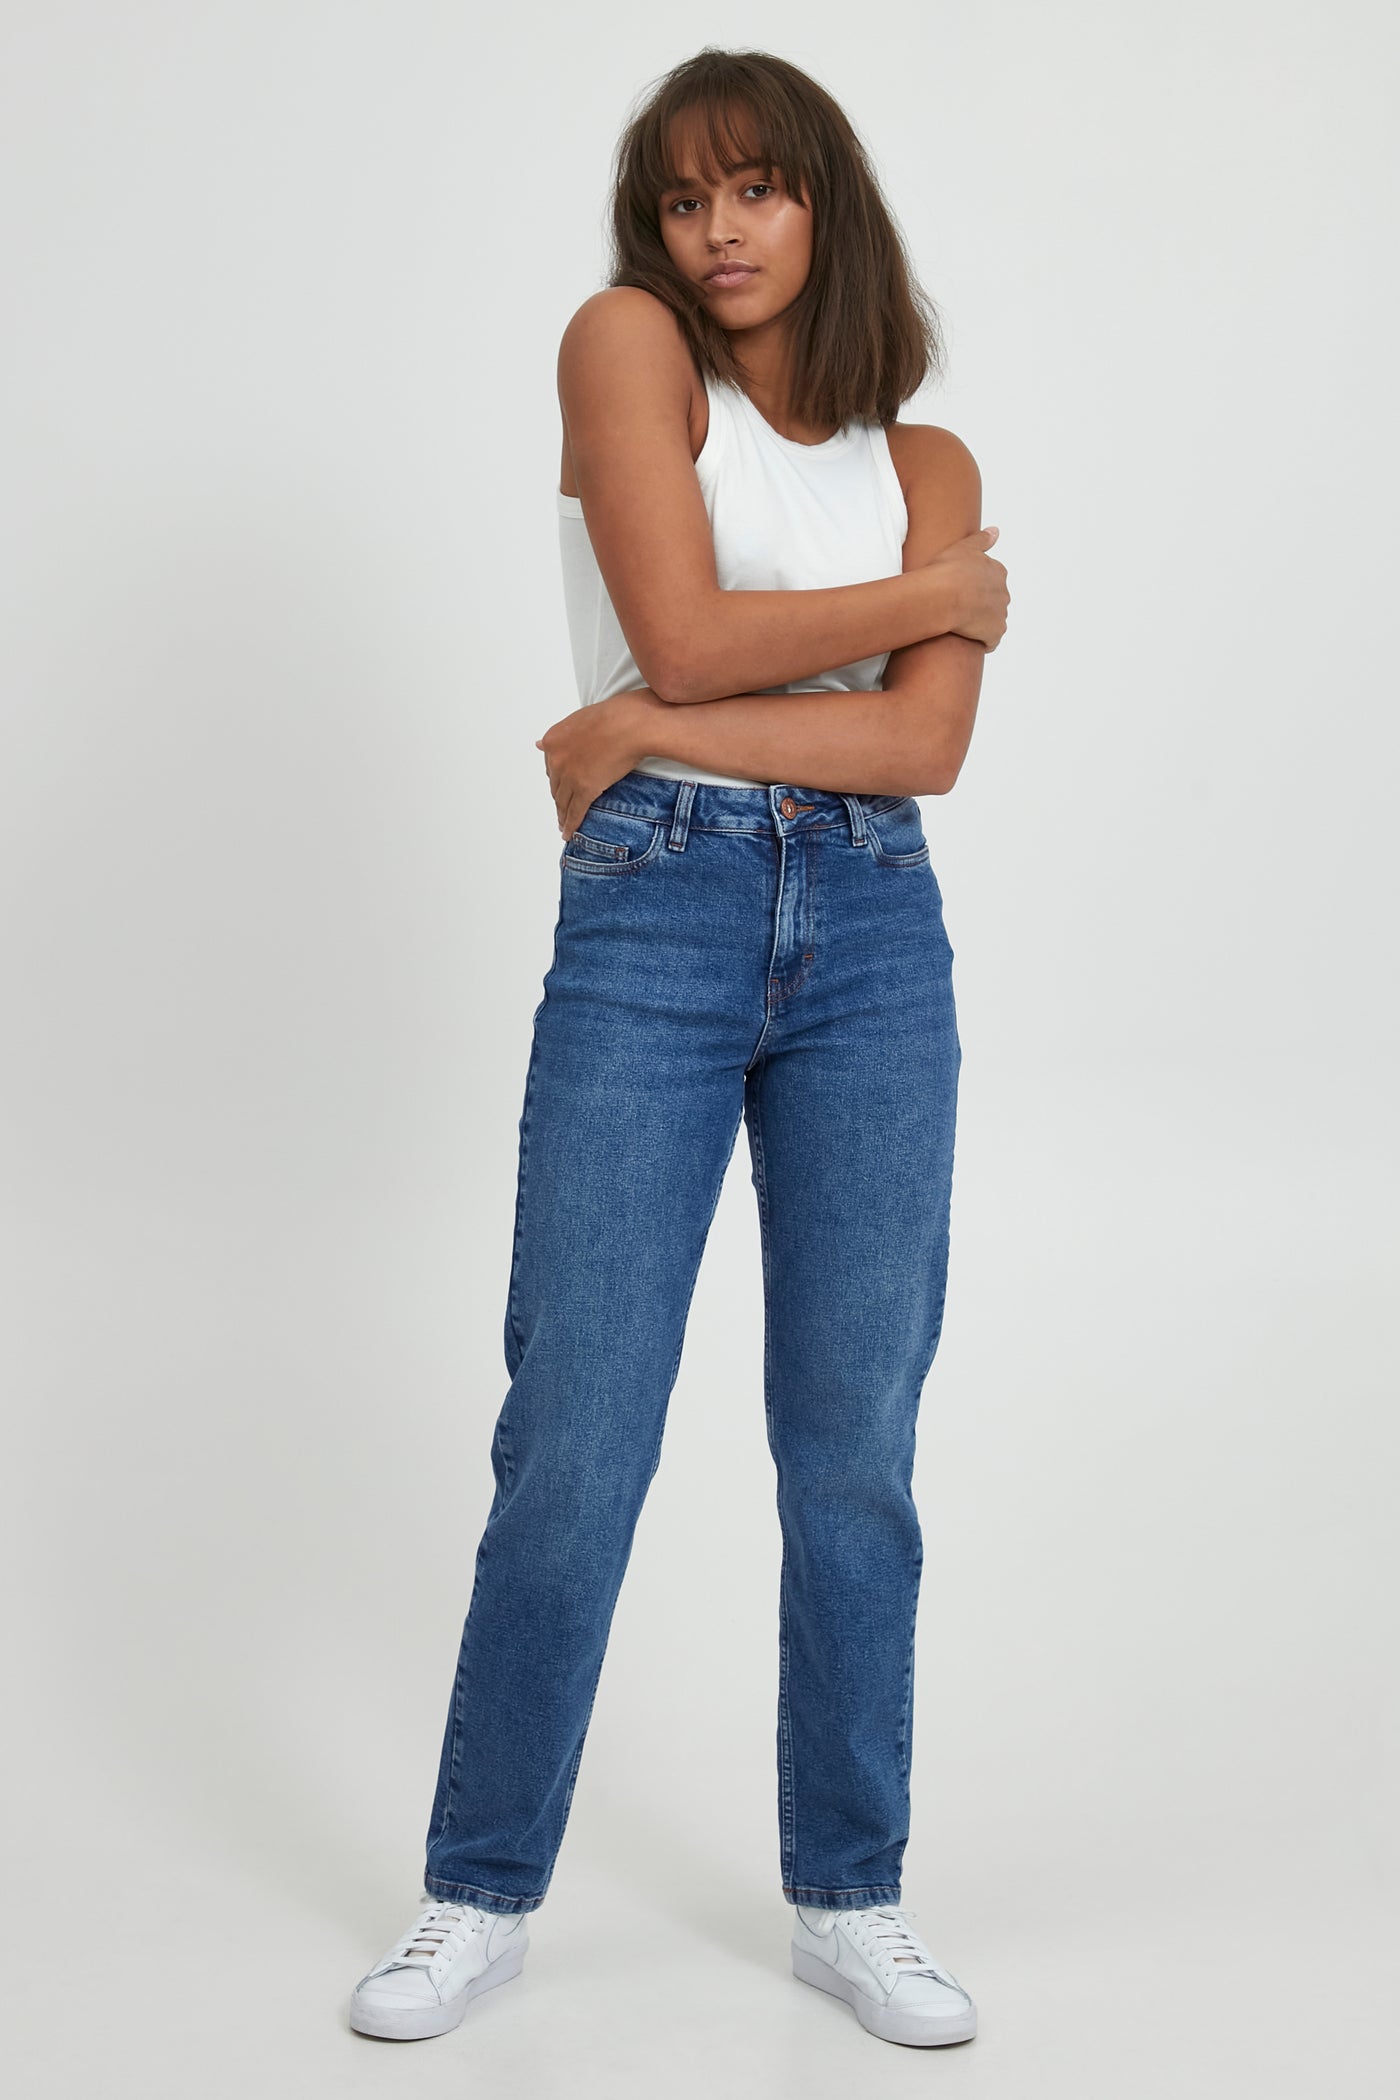 Liva jeans